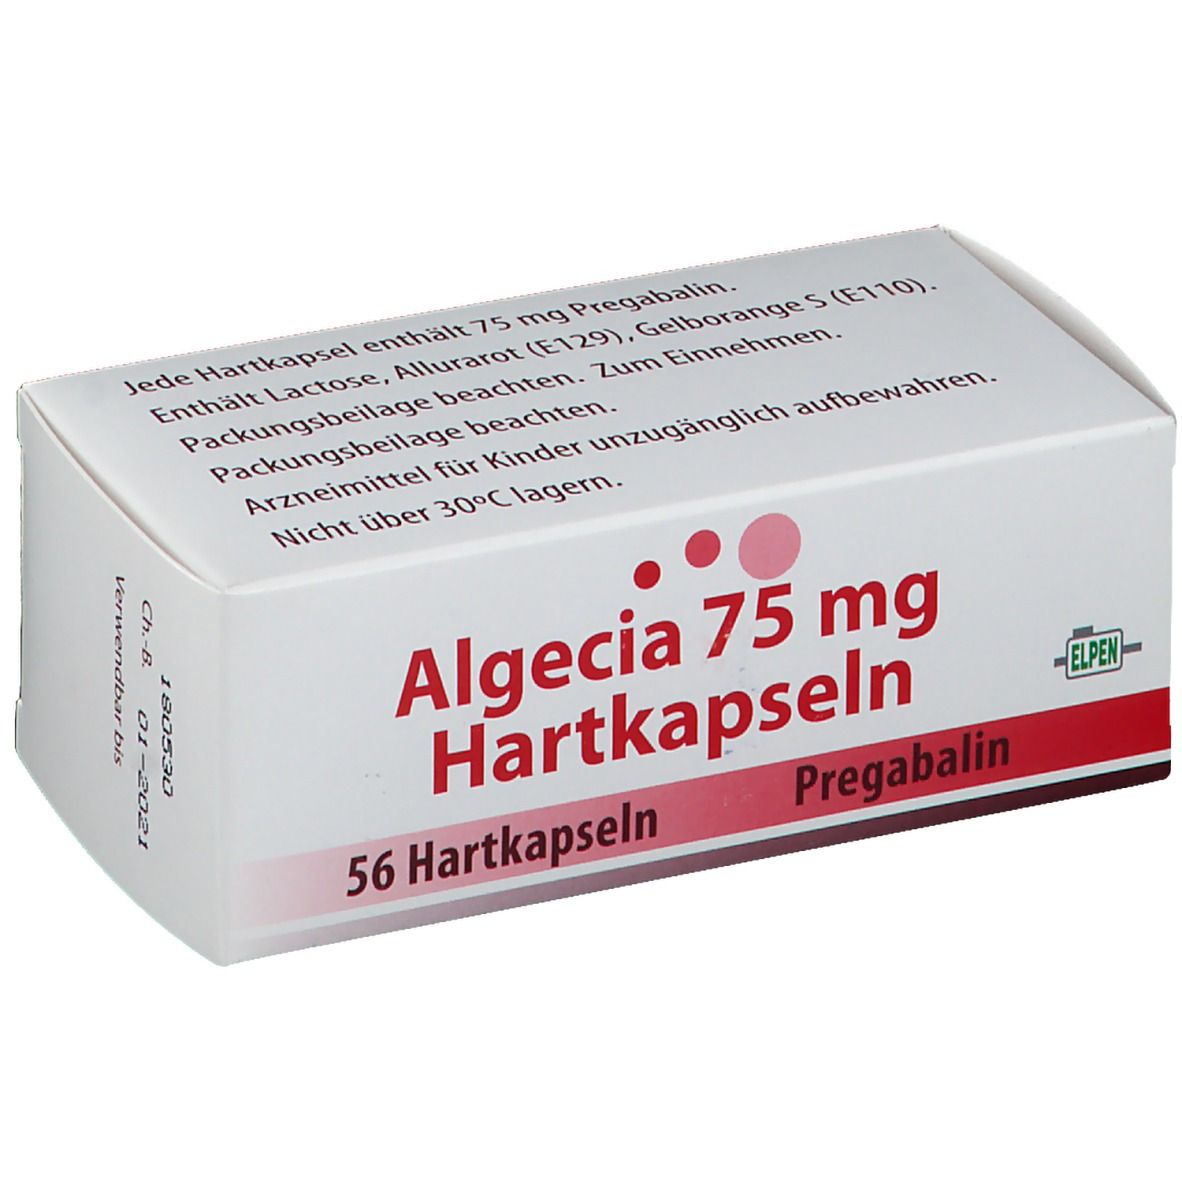 Algecia 75 mg